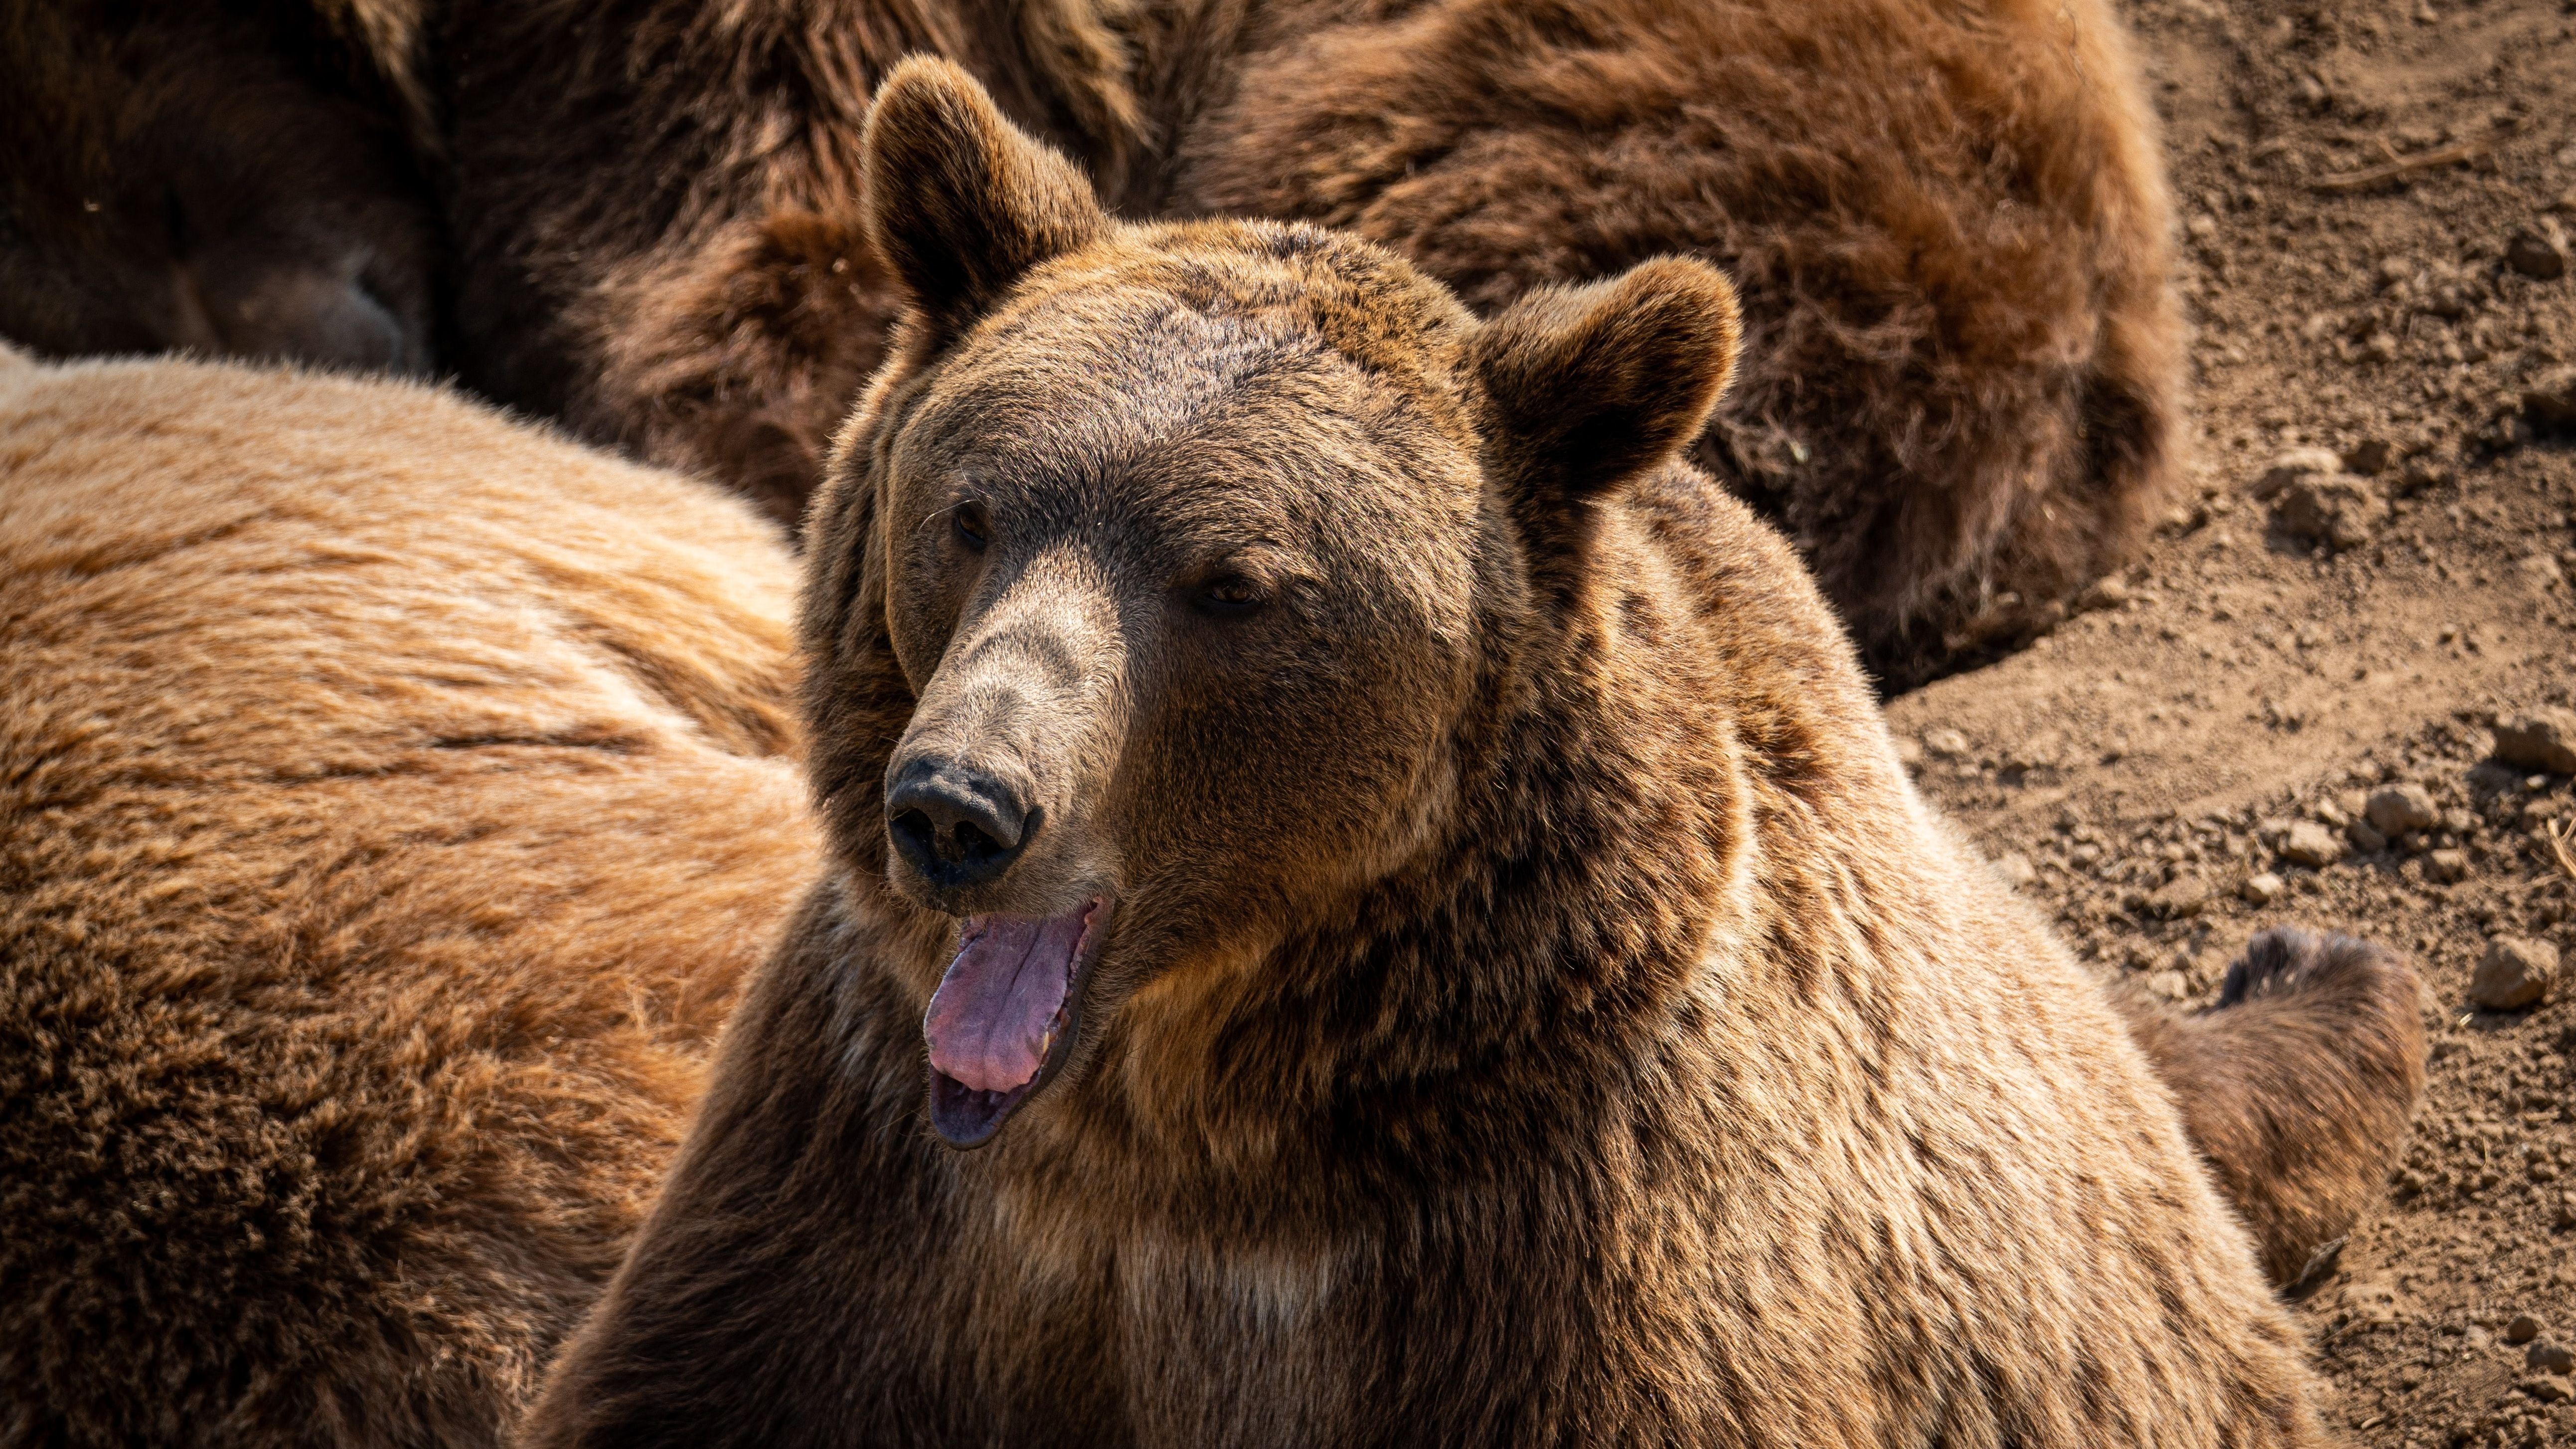 https://www.theverge.com/2020/10/6/21504751/fat-bear-week-champion-winner-2020-katmai-national-park?name=&_ke=